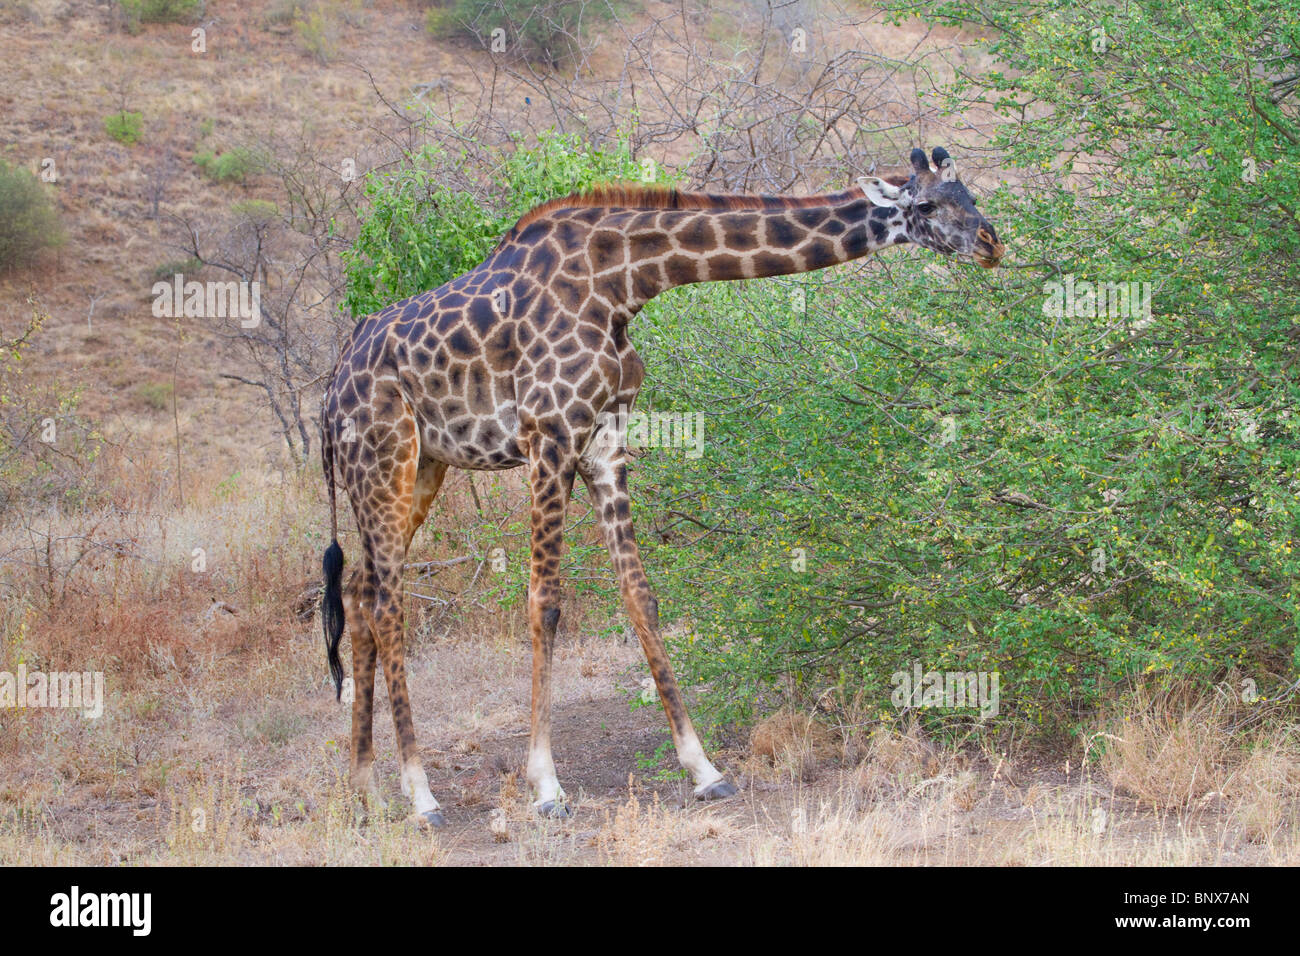 Reticulated giraffe (Giraffa camelopardalis reticulata) eating a low bush, Tsavo East national Park, Kenya. Stock Photo